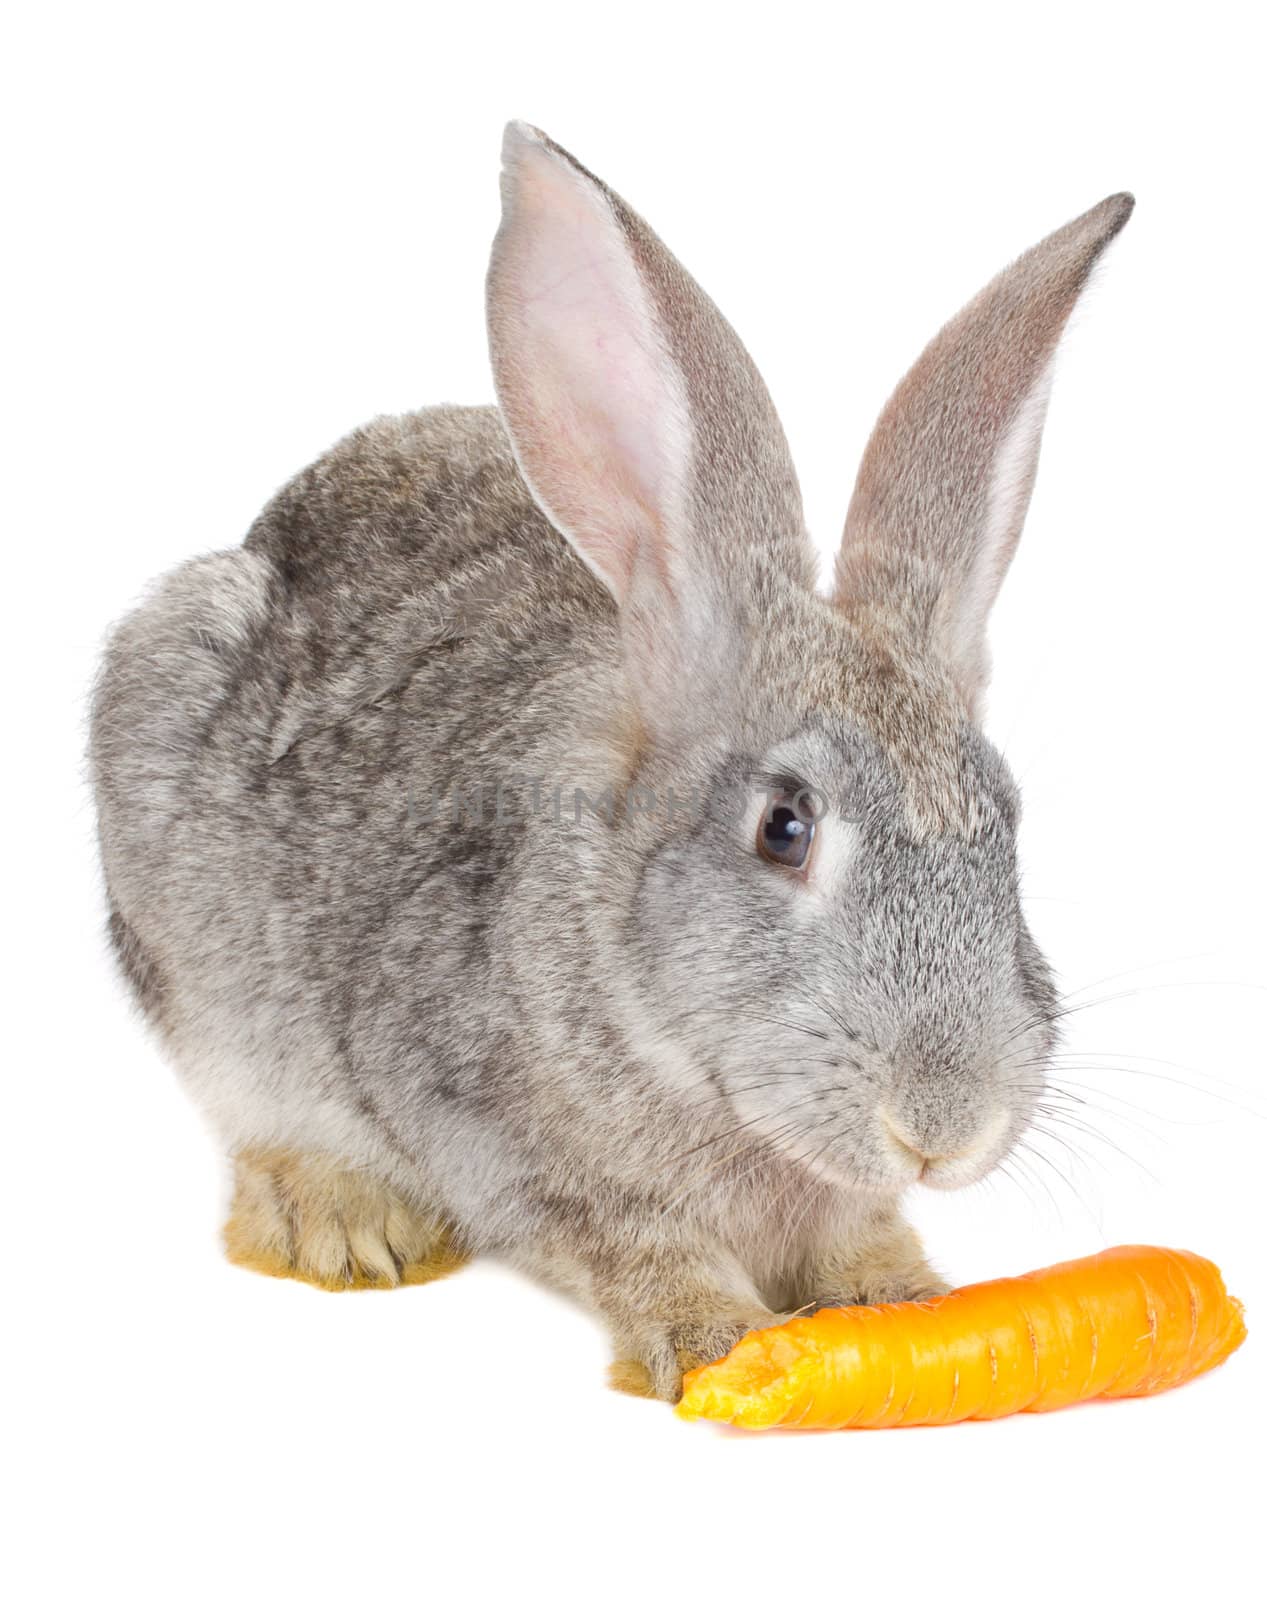 gray rabbit eating carrot, isolated on white